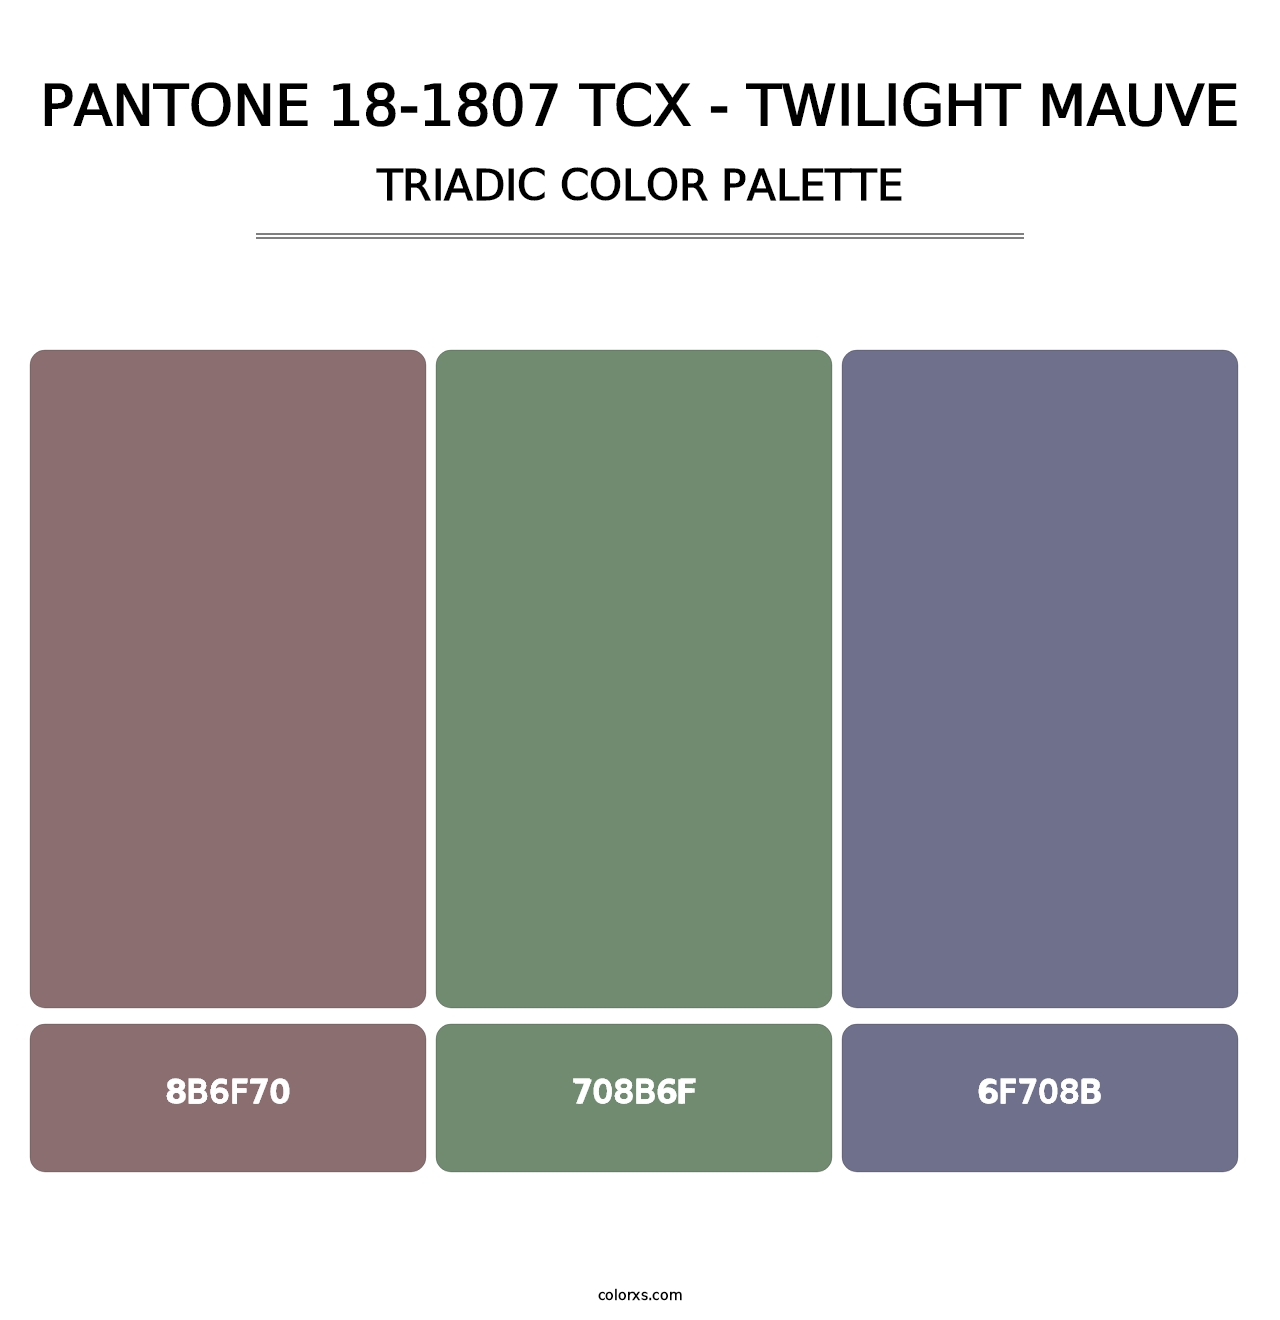 PANTONE 18-1807 TCX - Twilight Mauve - Triadic Color Palette